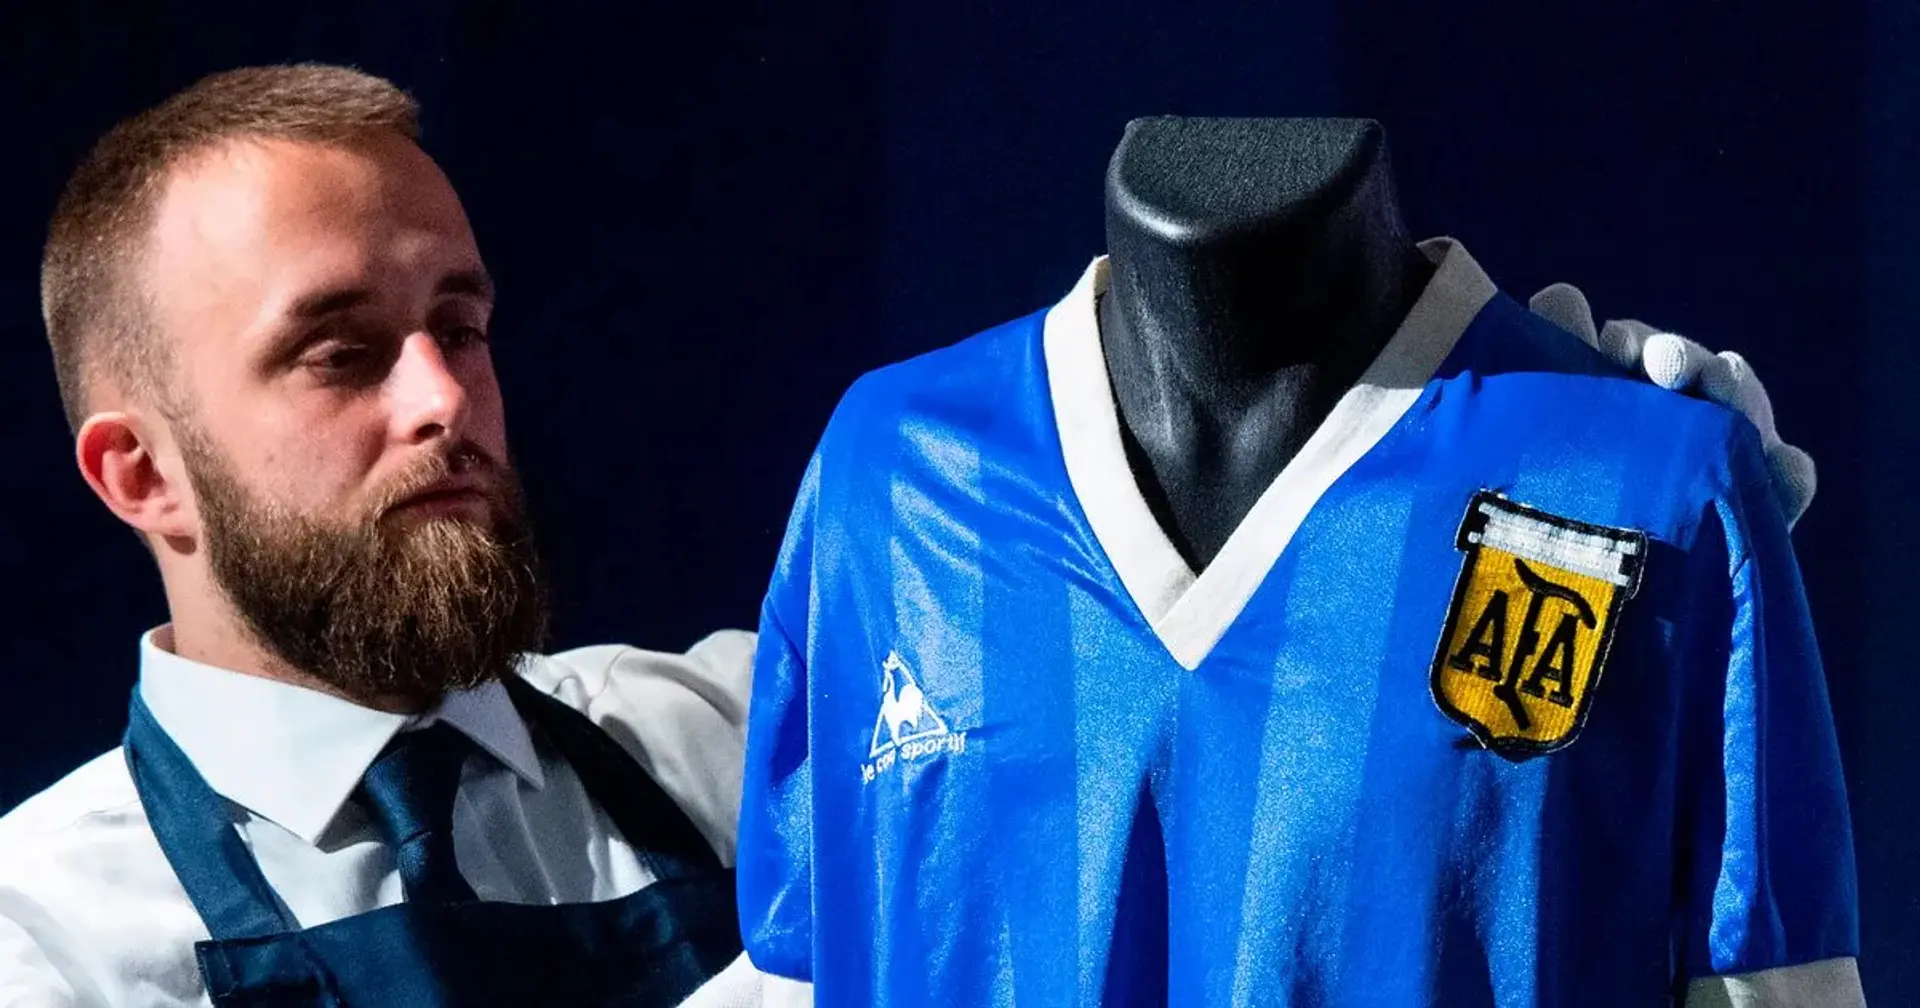 Diego Maradona's 'Hand of God' shirt sold for over £7m despite Argentina protest